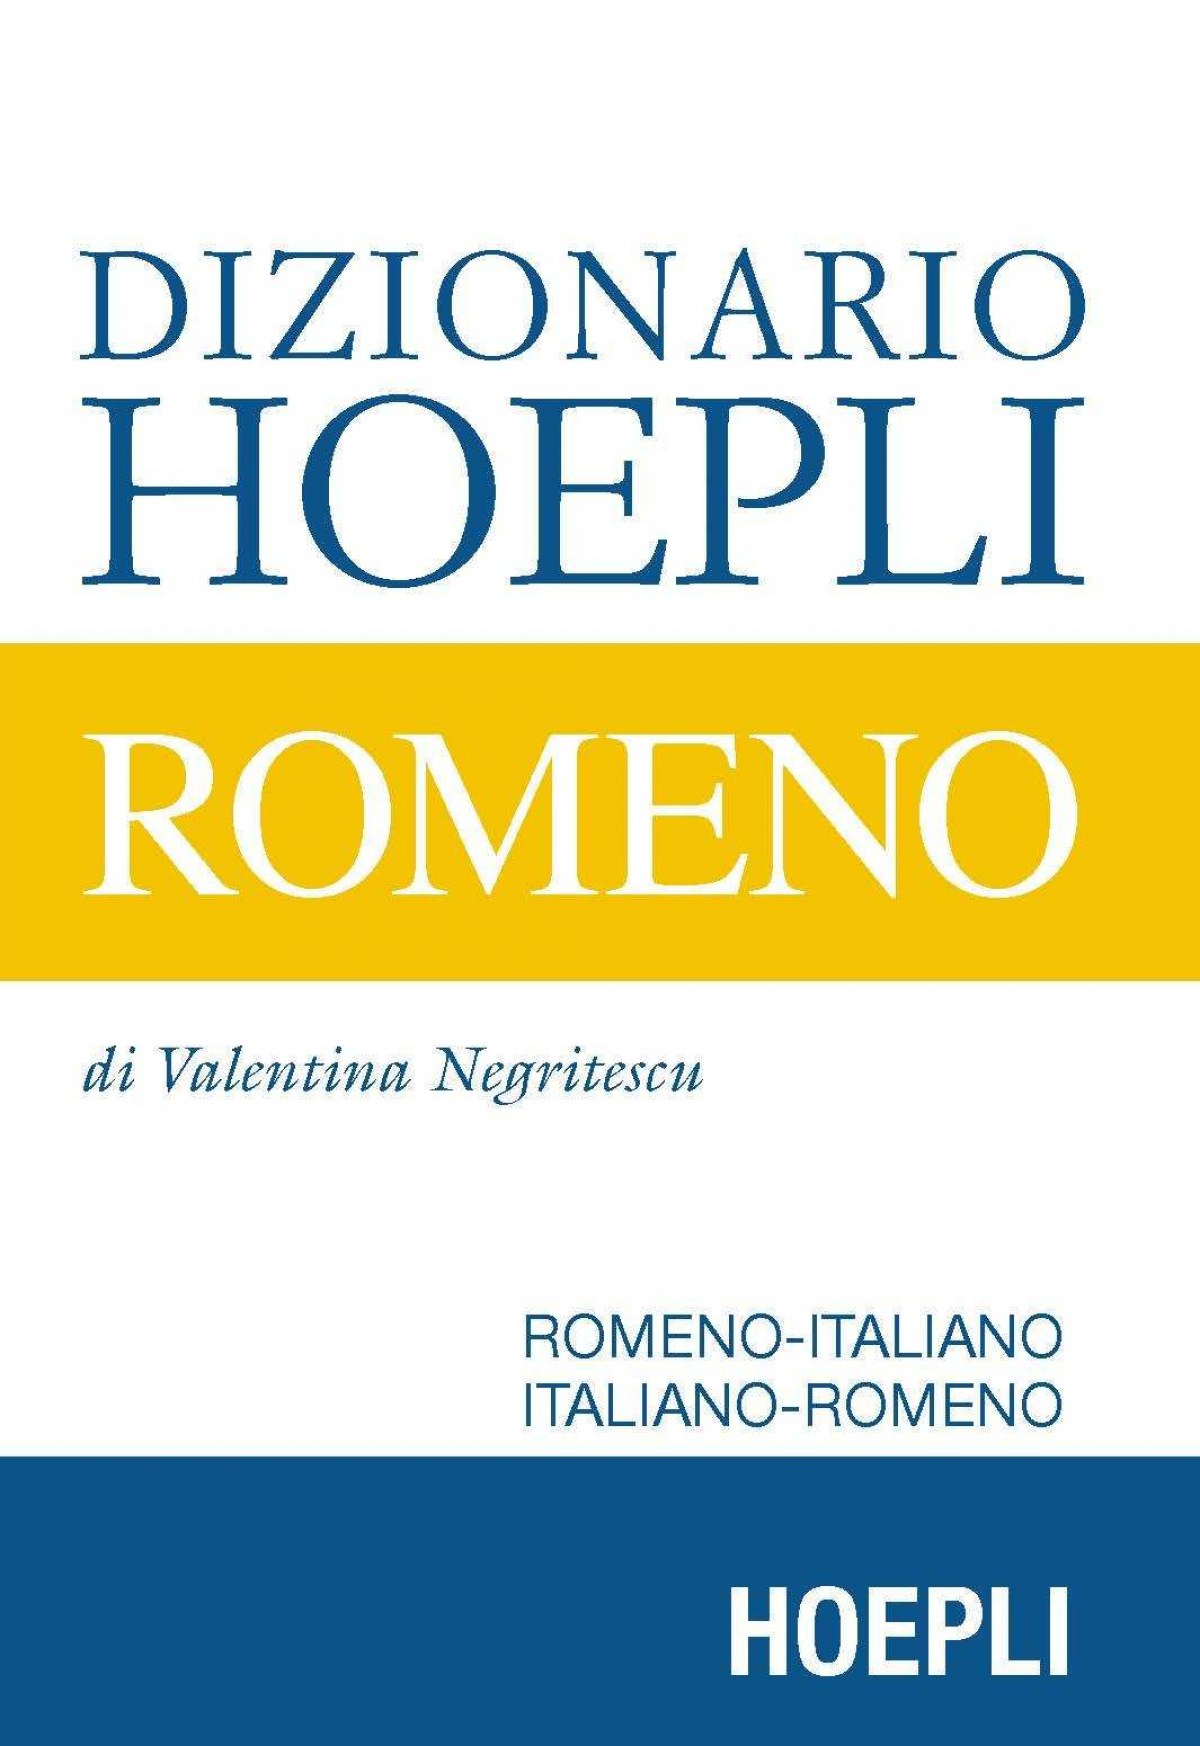 Dizionario Hoepli Romeno - Valentina, Negritescu